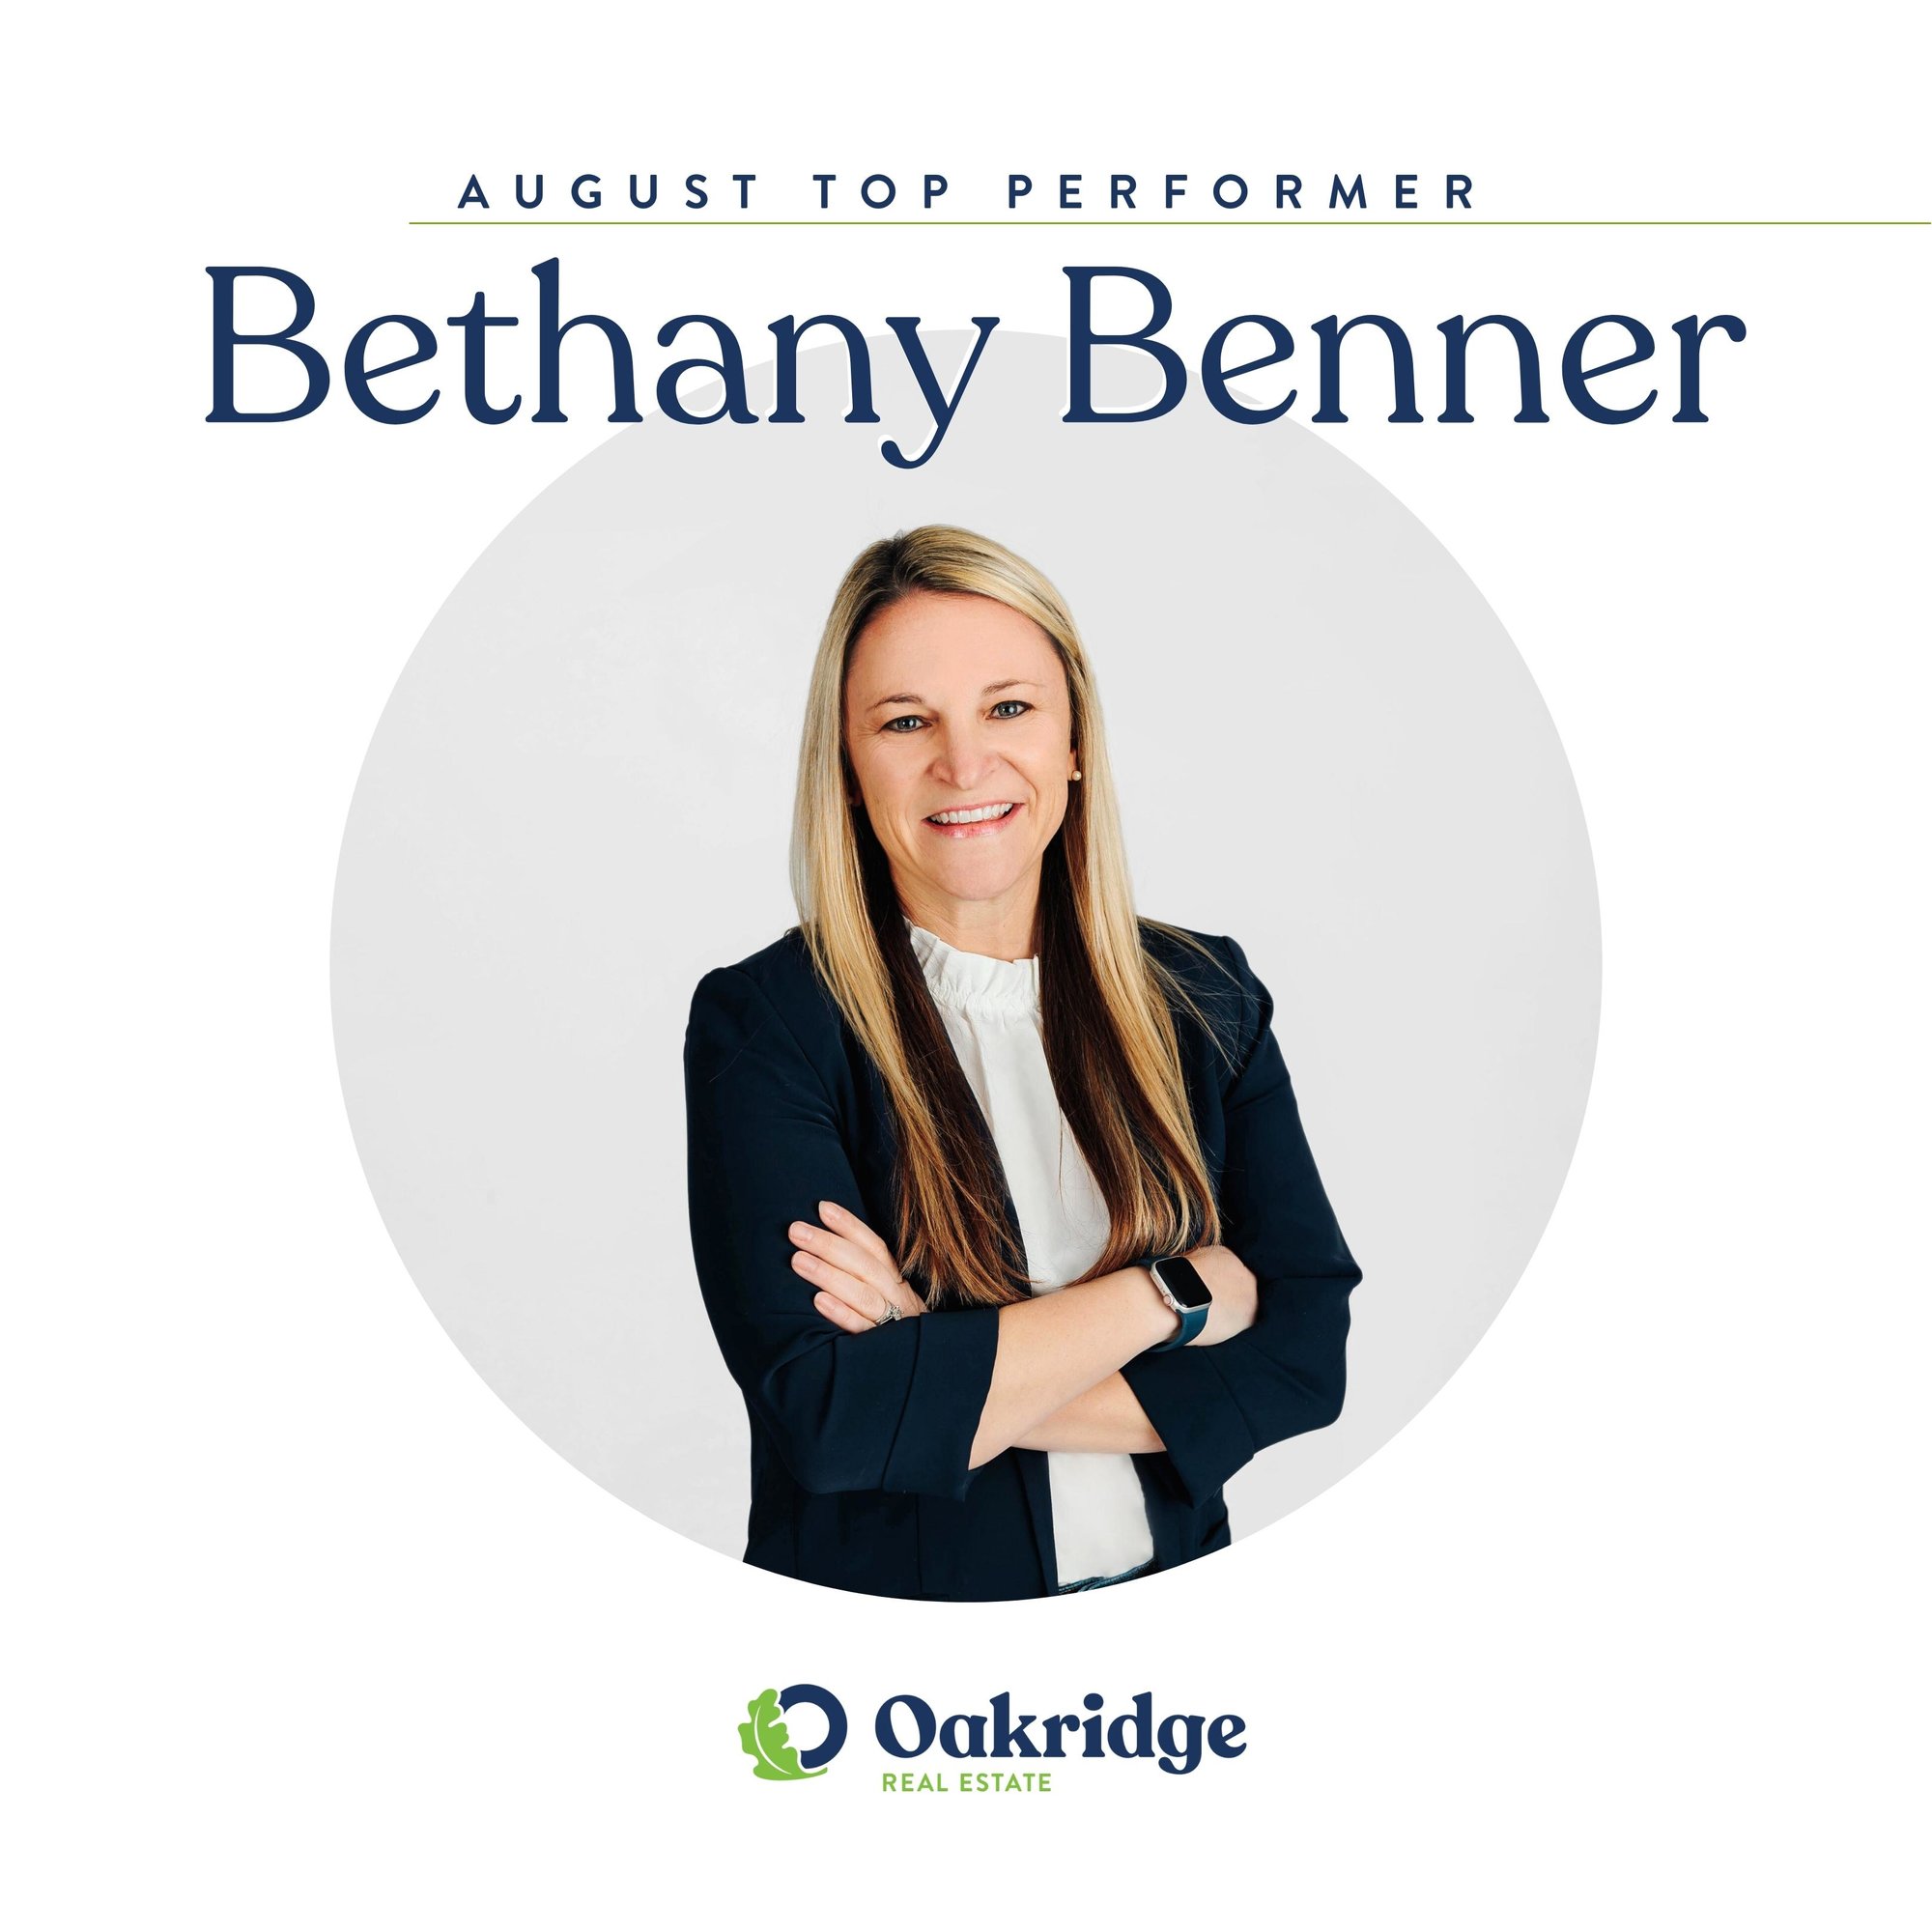 Bethany Benner Oakridge Real Estate August Top Performer